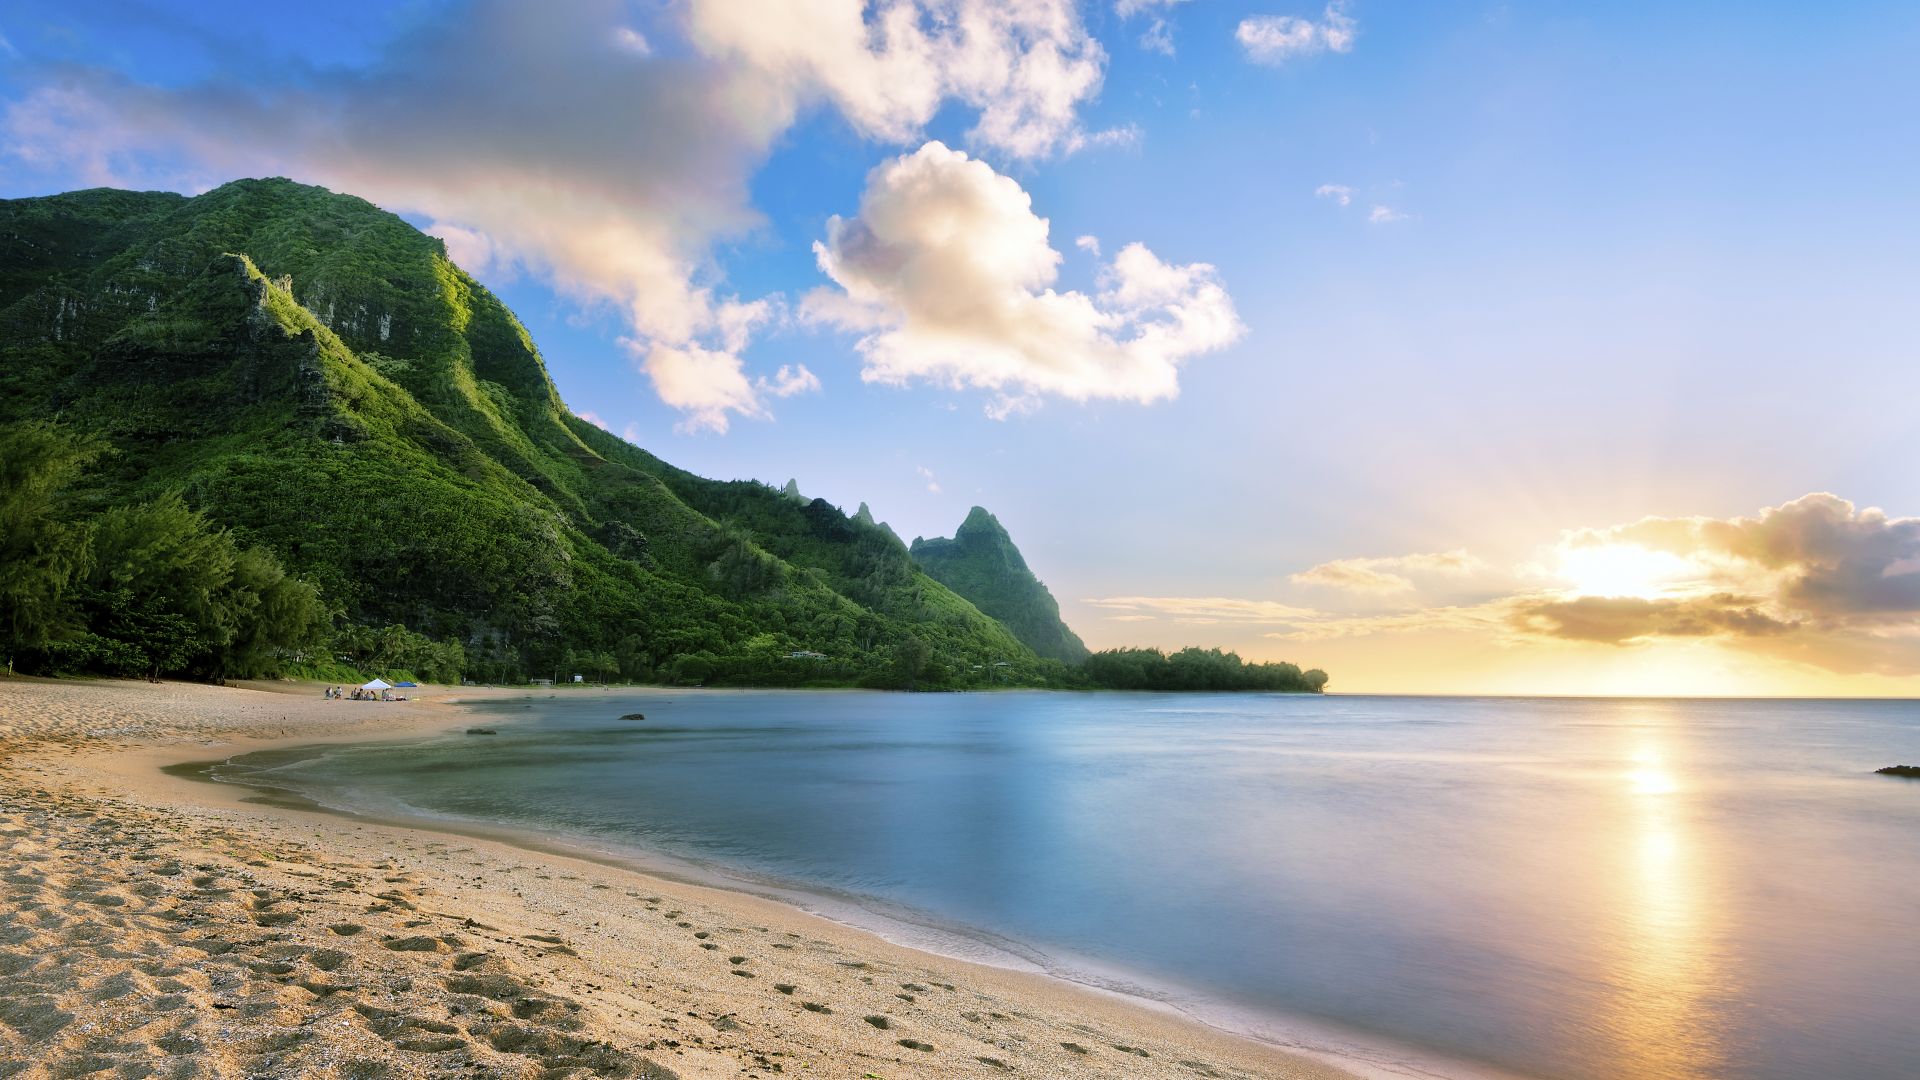 Maui, Hawaii, beach, ocean, coast, mountain, sky, 5k (horizontal)